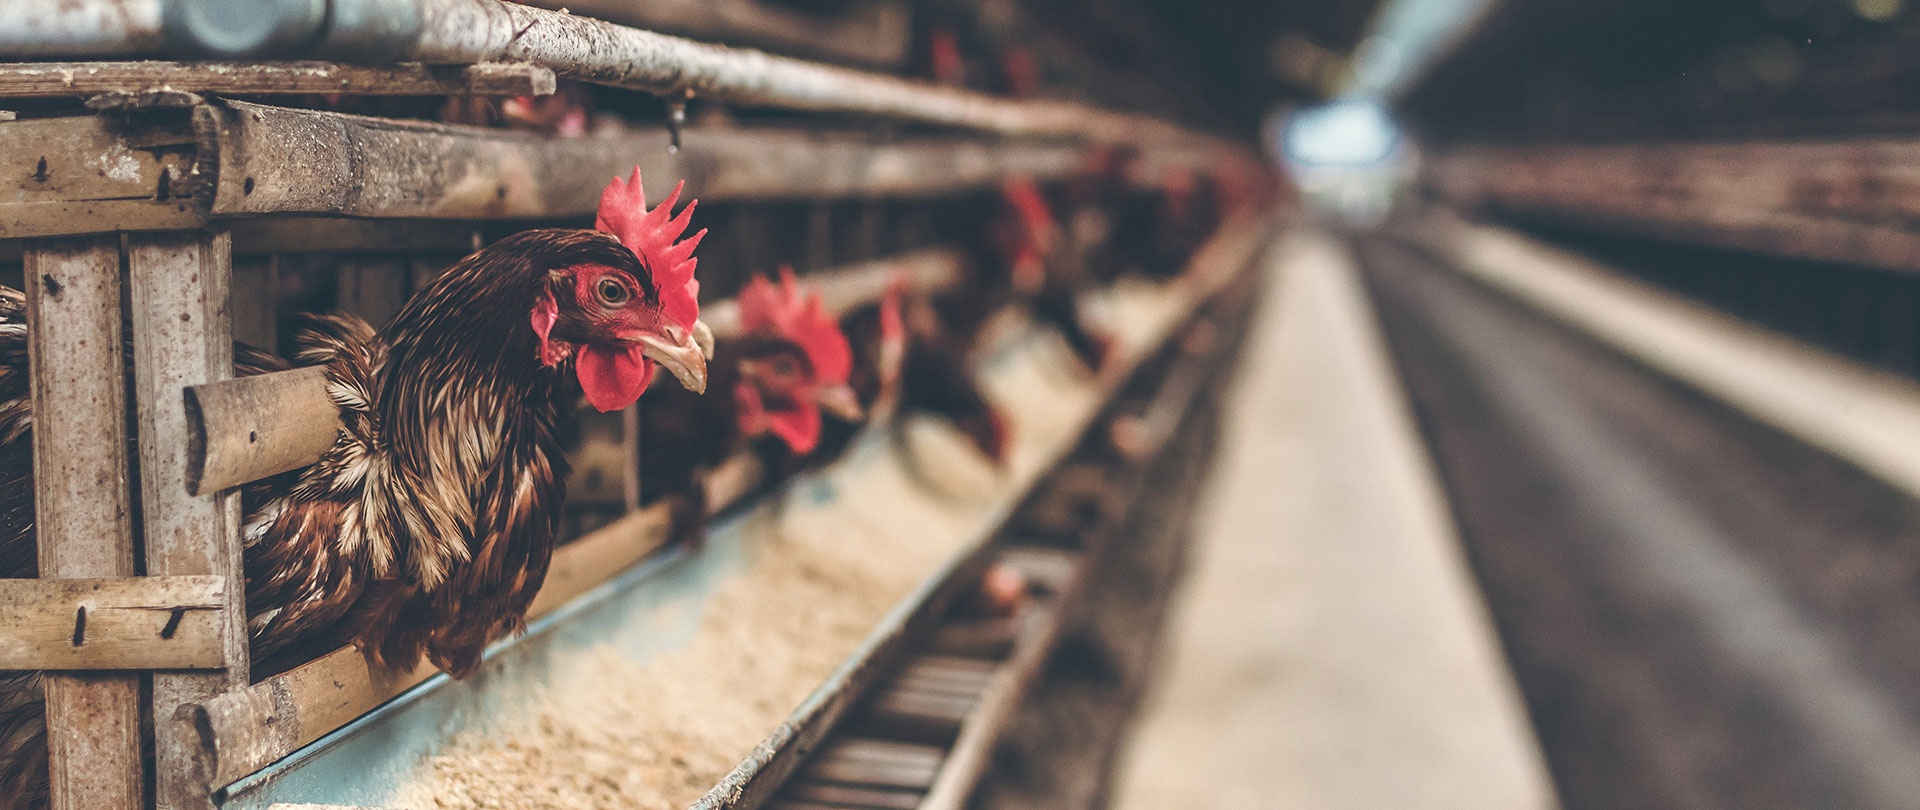 poultry-farming-slider-2